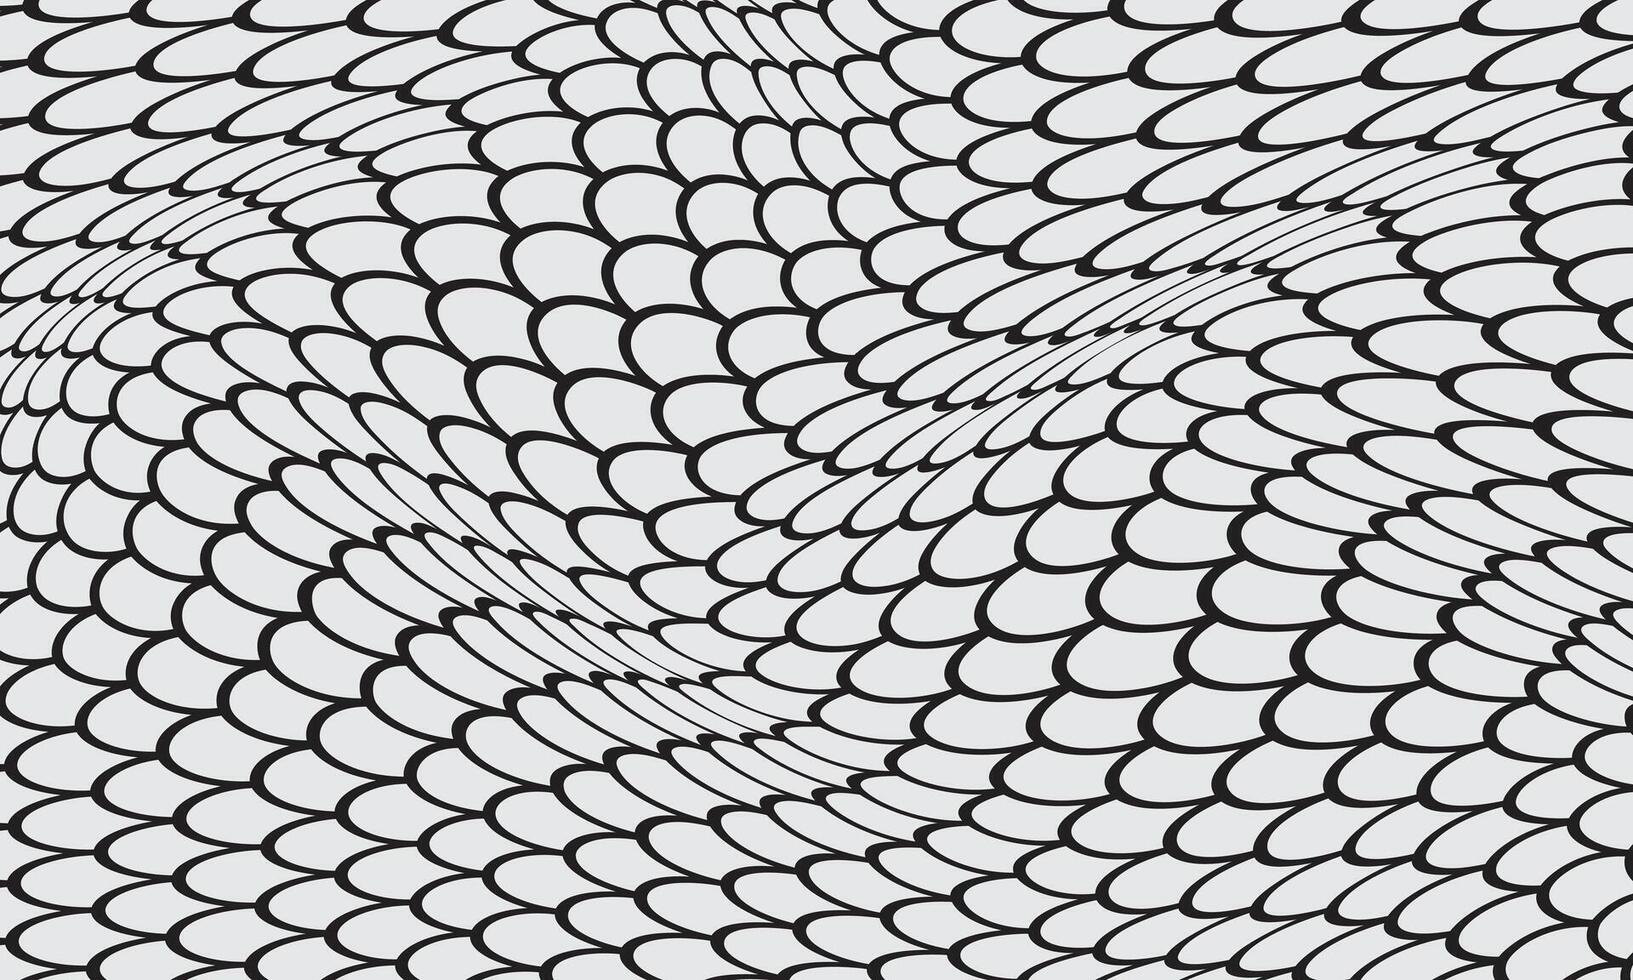 abstrakt geometrisk fisk skala mönster vektor illustration.